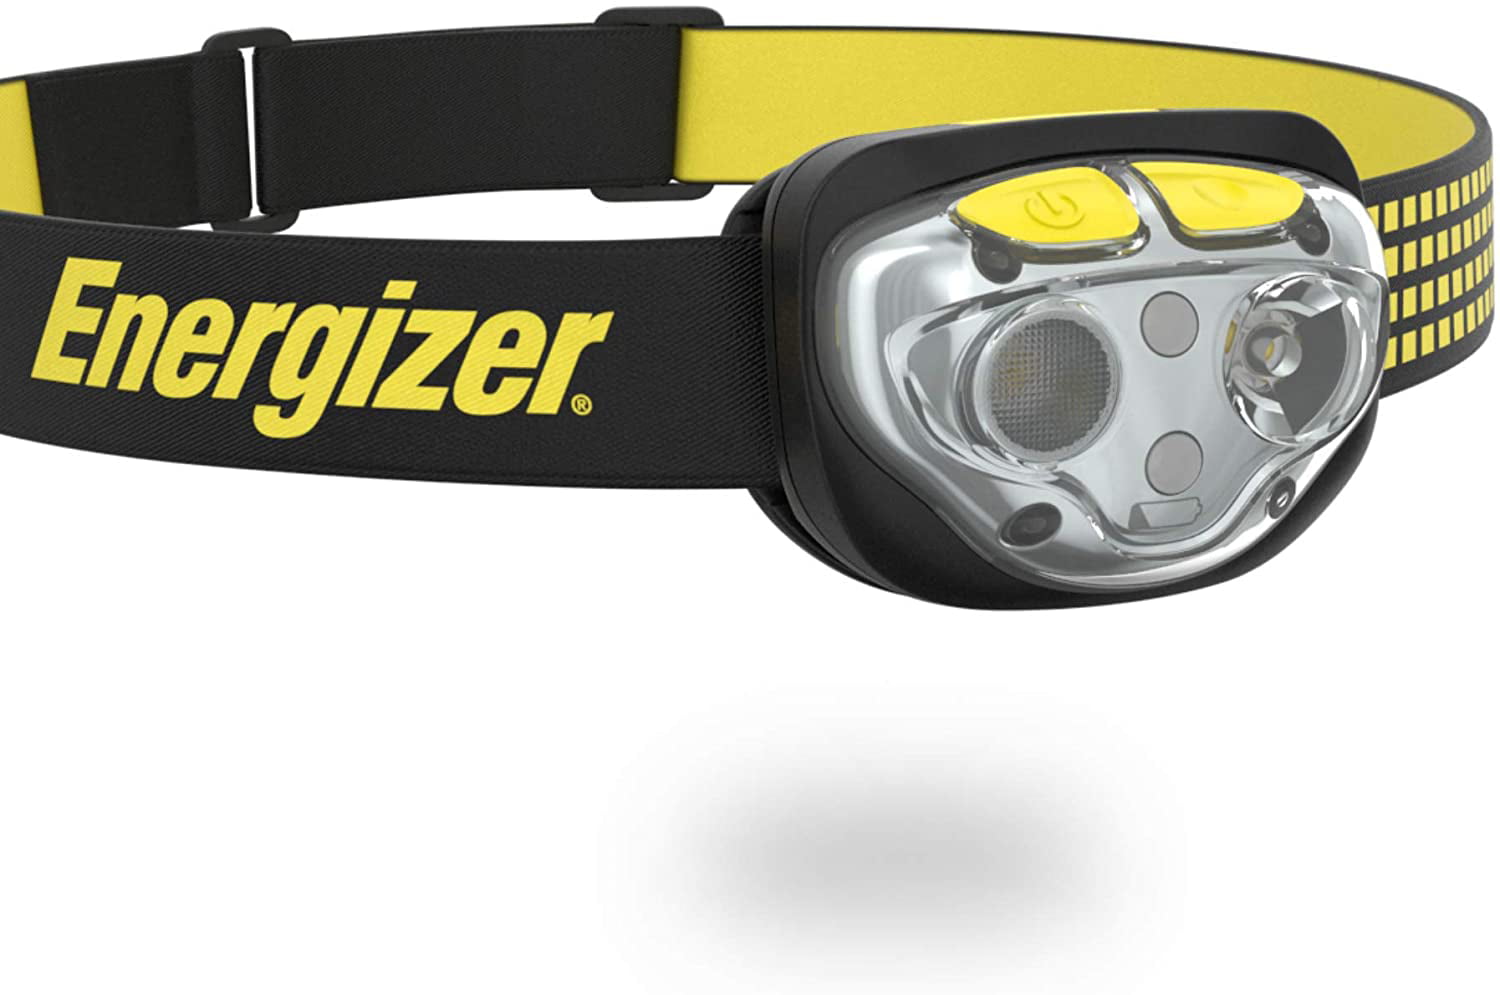 Energizer Vision Ultra Focus Headlight 3 AAA Energizer Batteries 400 Lumen 